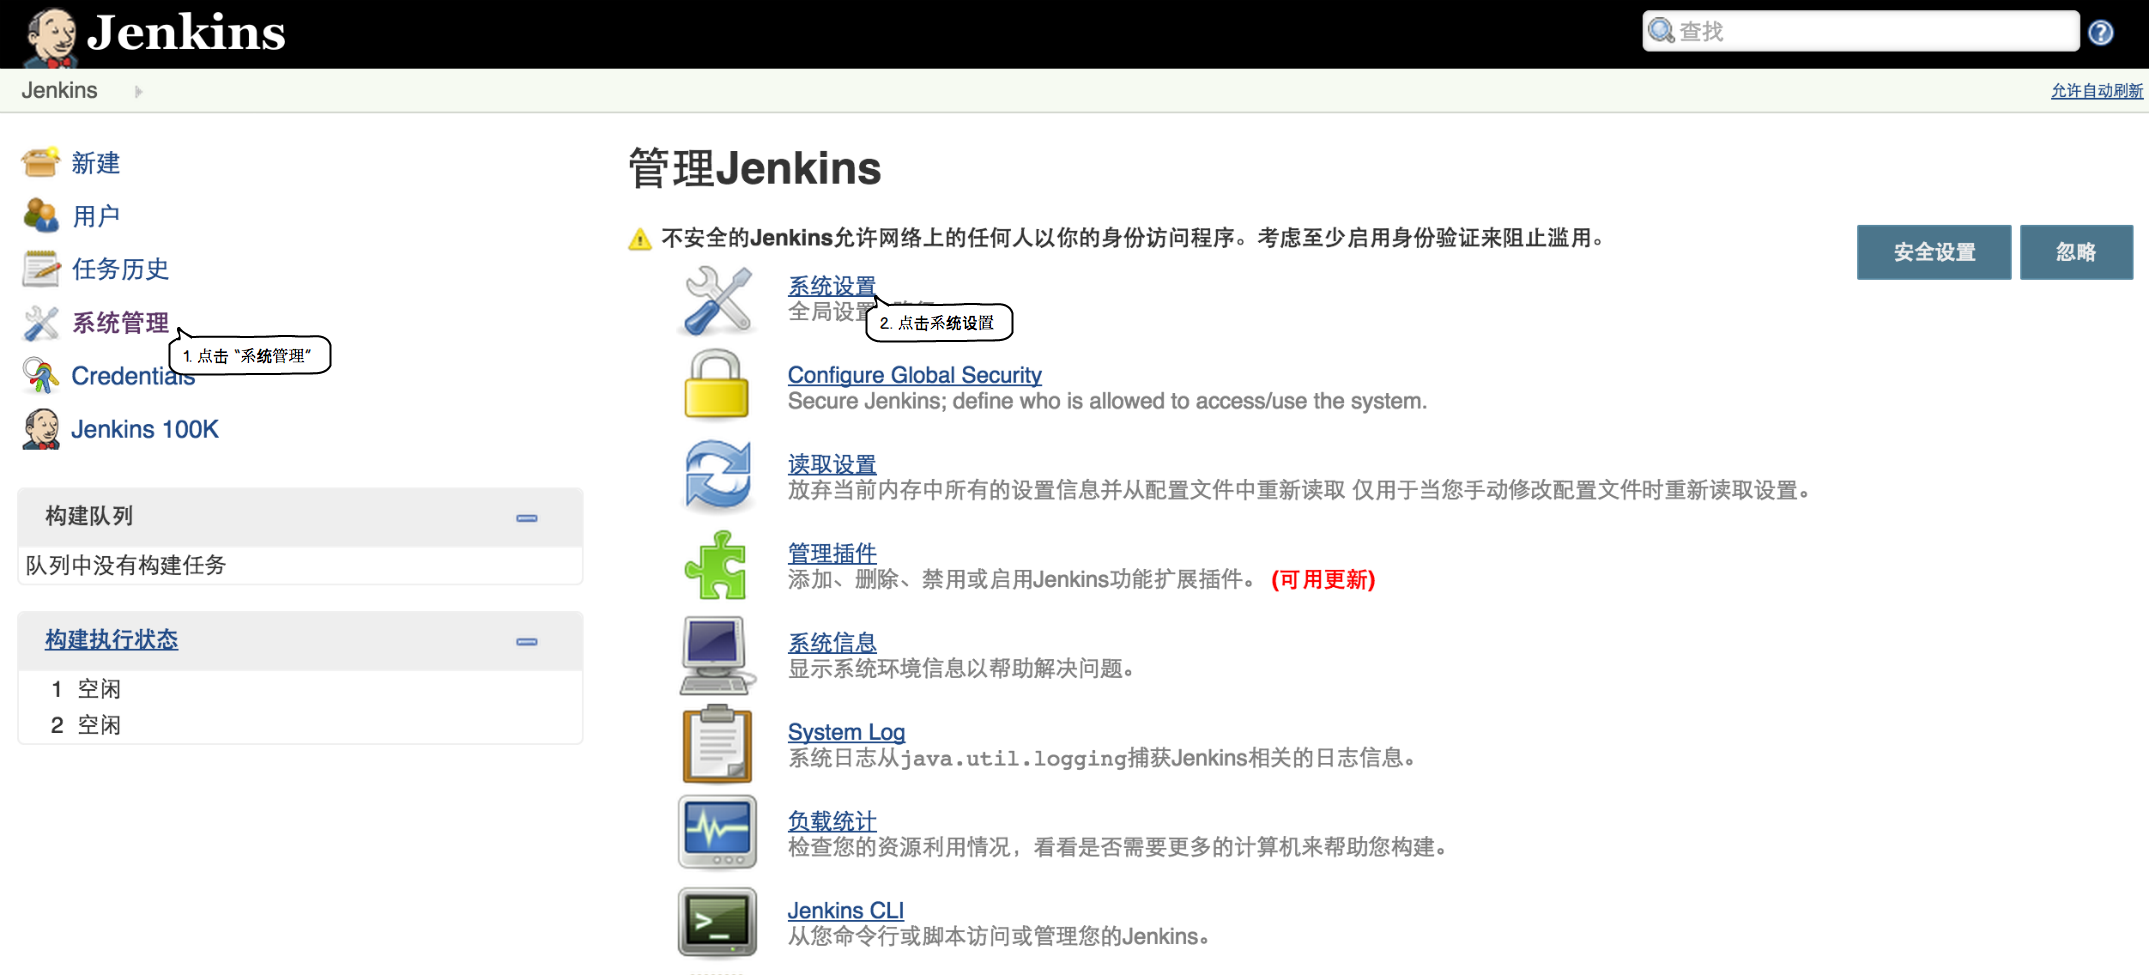 Jenkins Master配置页面